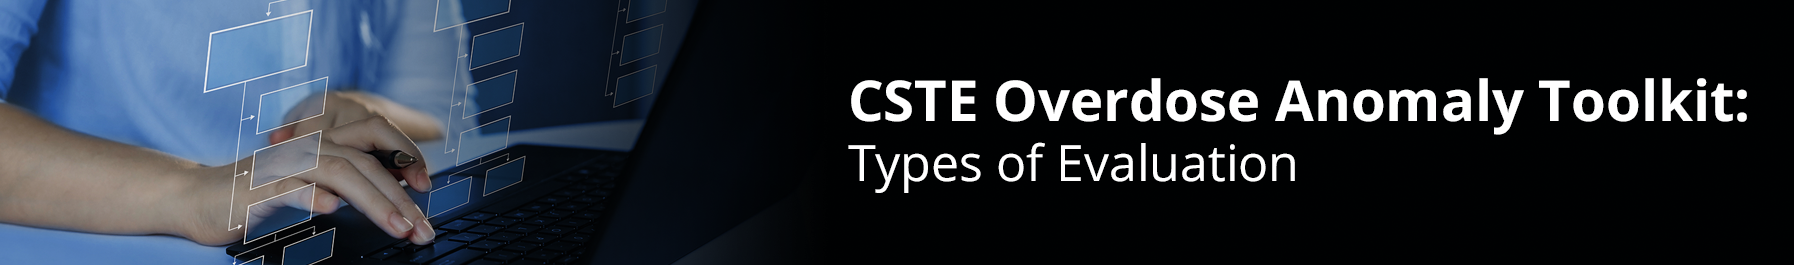 CSTE Overdose Anomaly Toolkit: Types of Evaluation